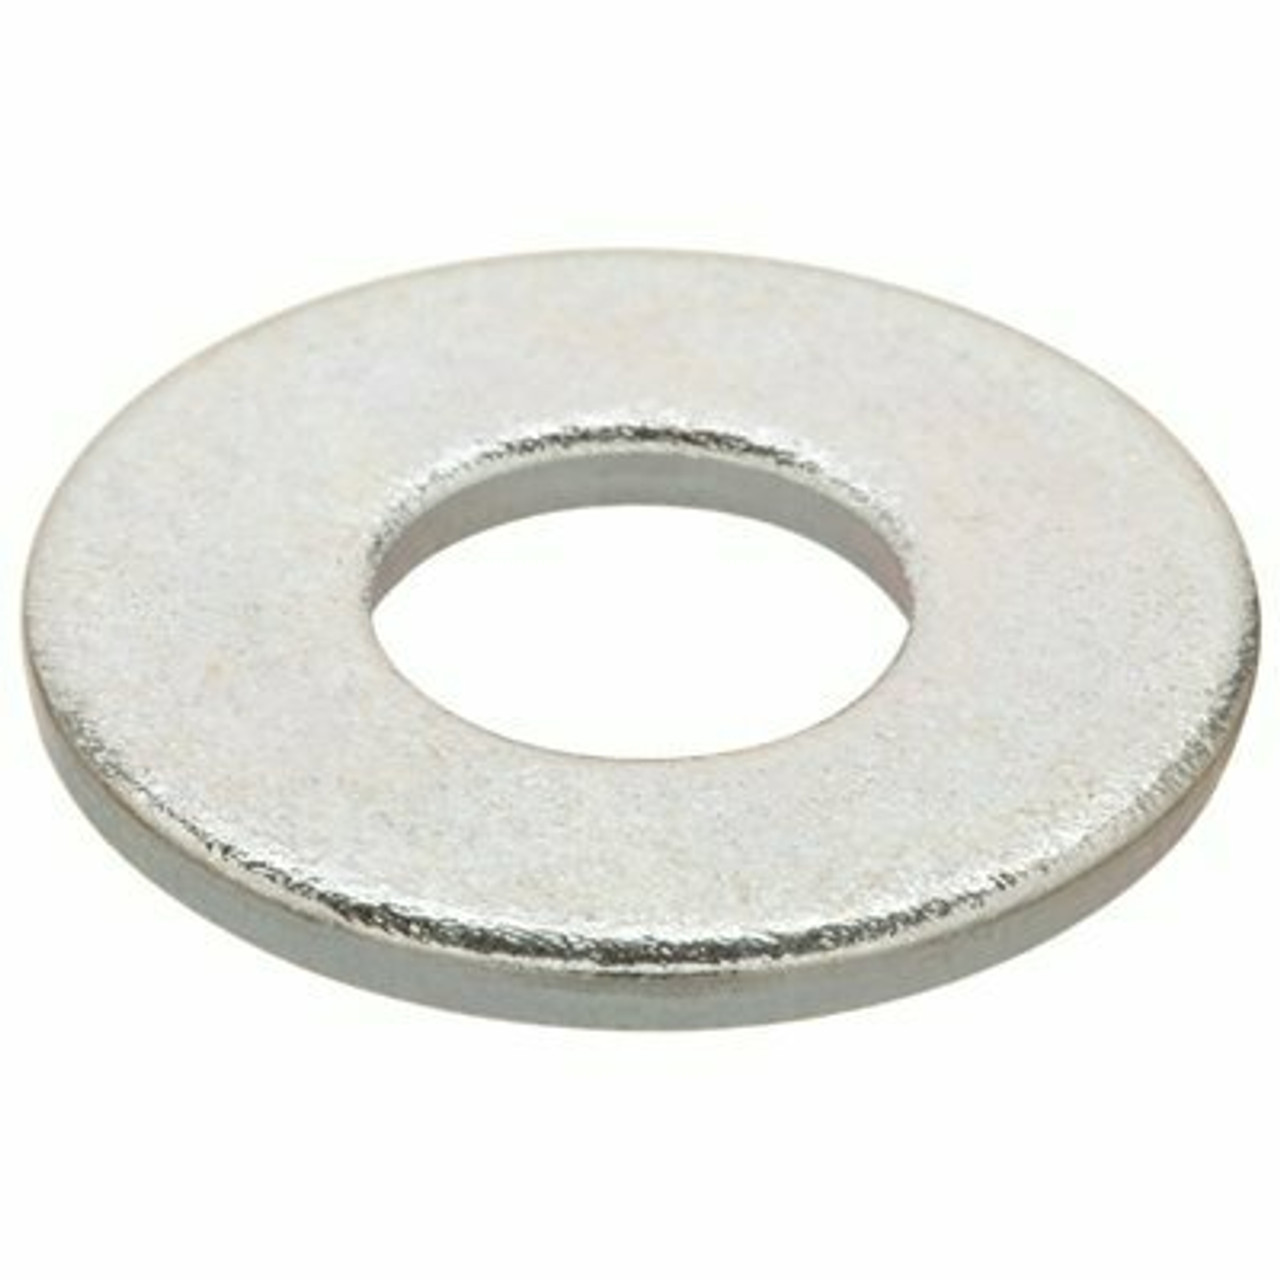 Everbilt 1/4 In. Zinc Flat Washer (100-Pack) - 3583993